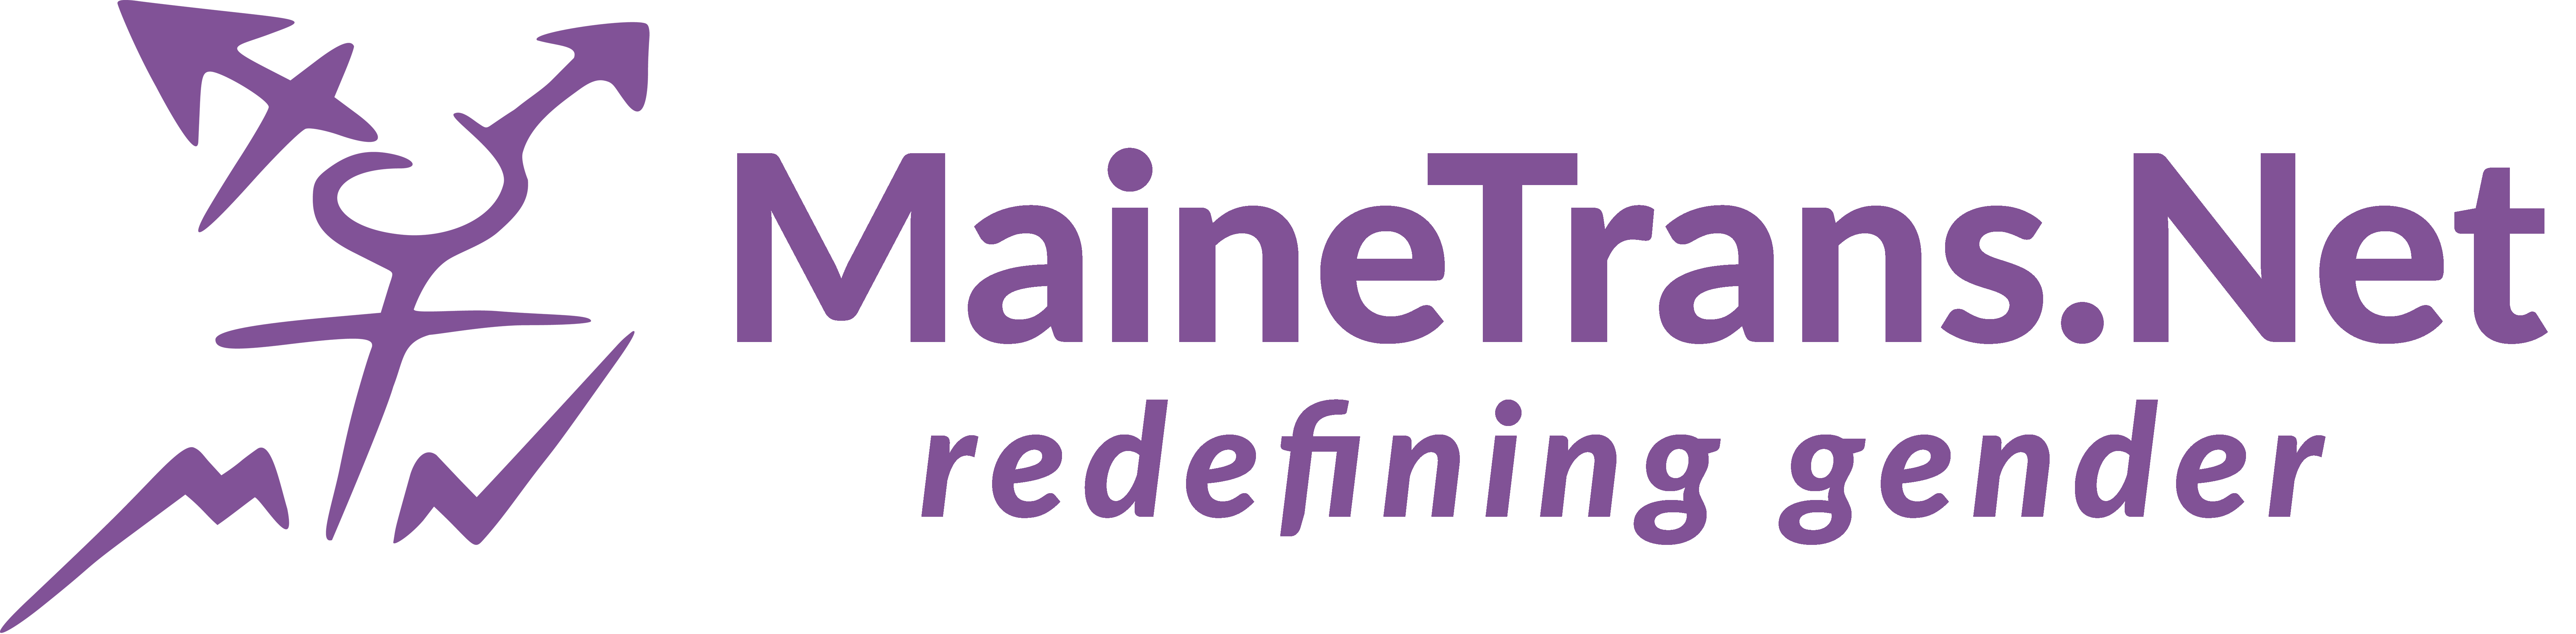 MaineTransNet logo in purple text